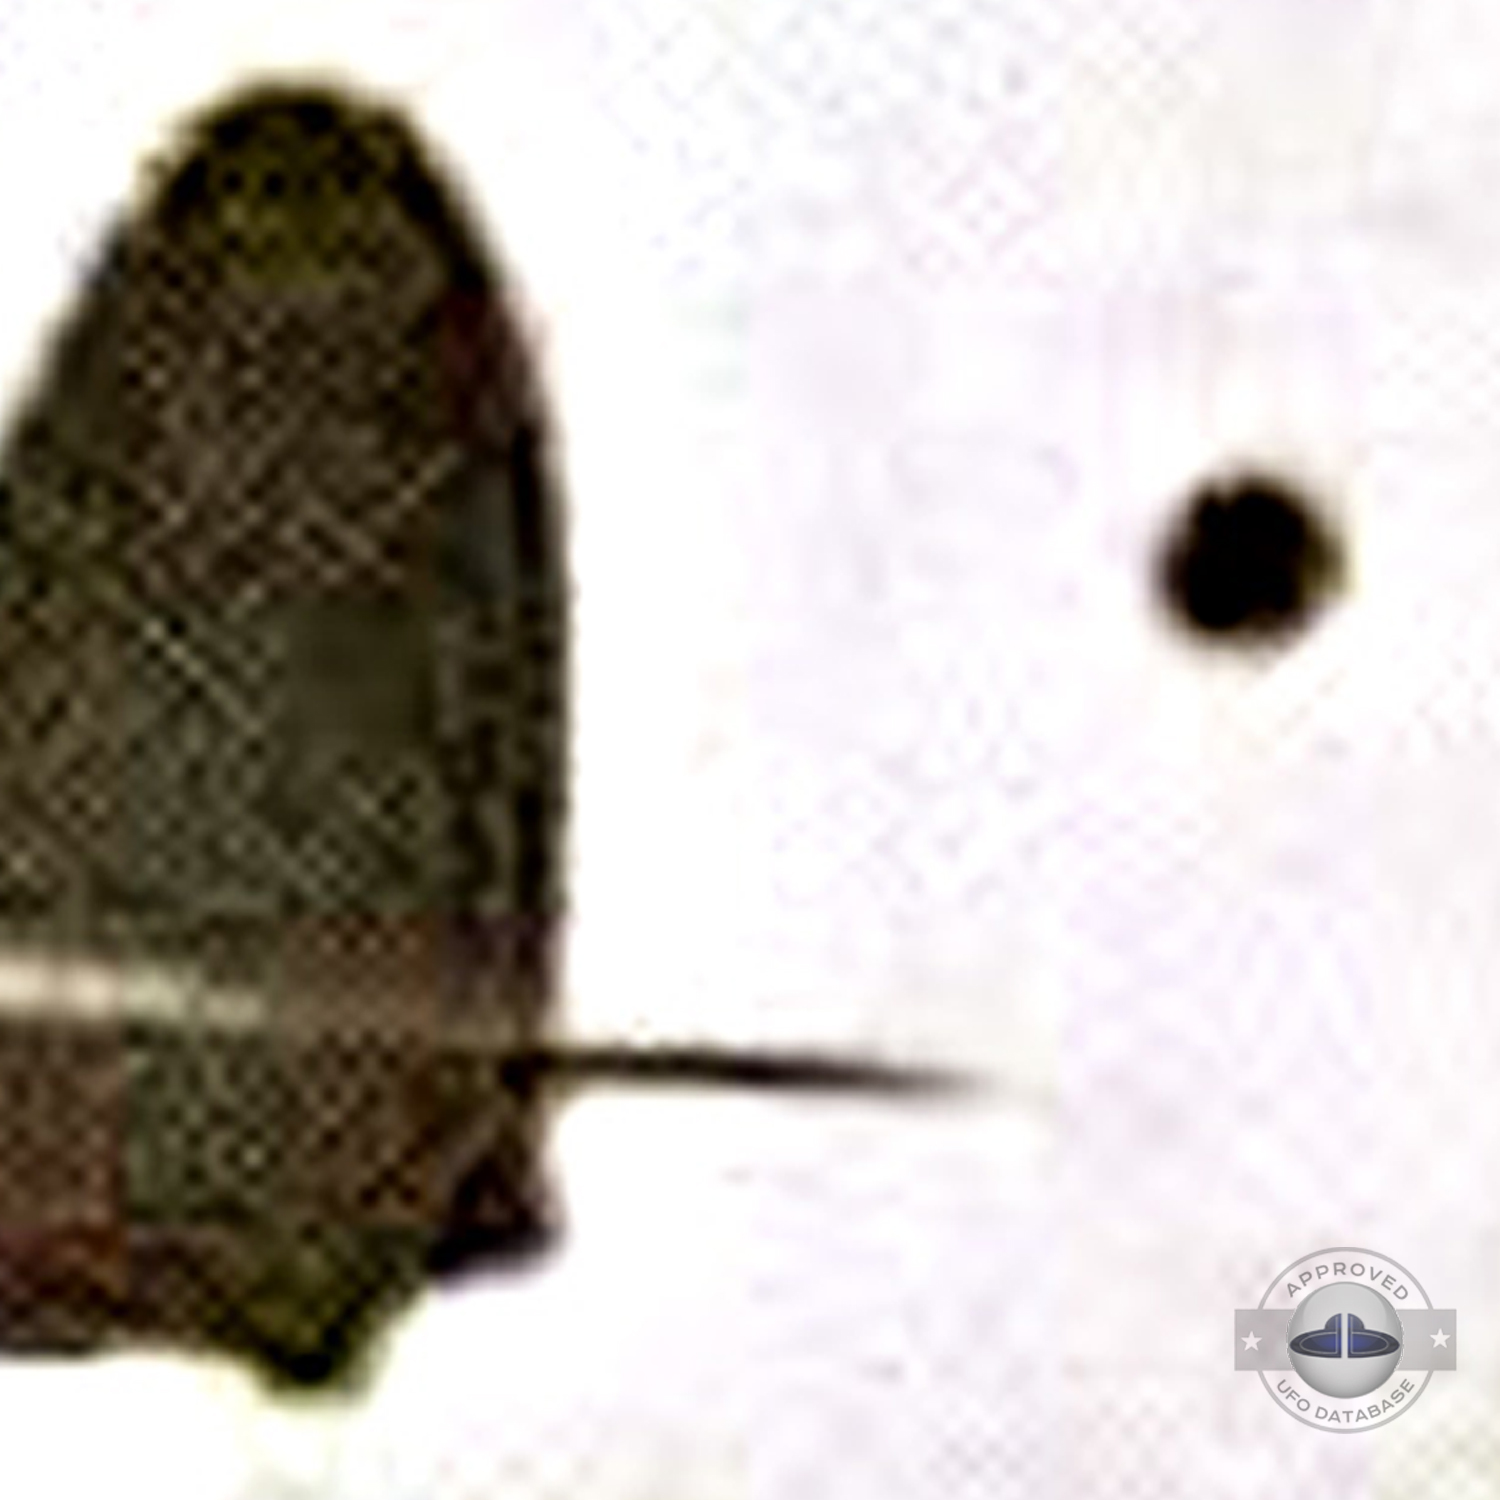 World War II Japanese Sally Bomber followed by UFO (Foo Fighters) UFO Picture #209-4